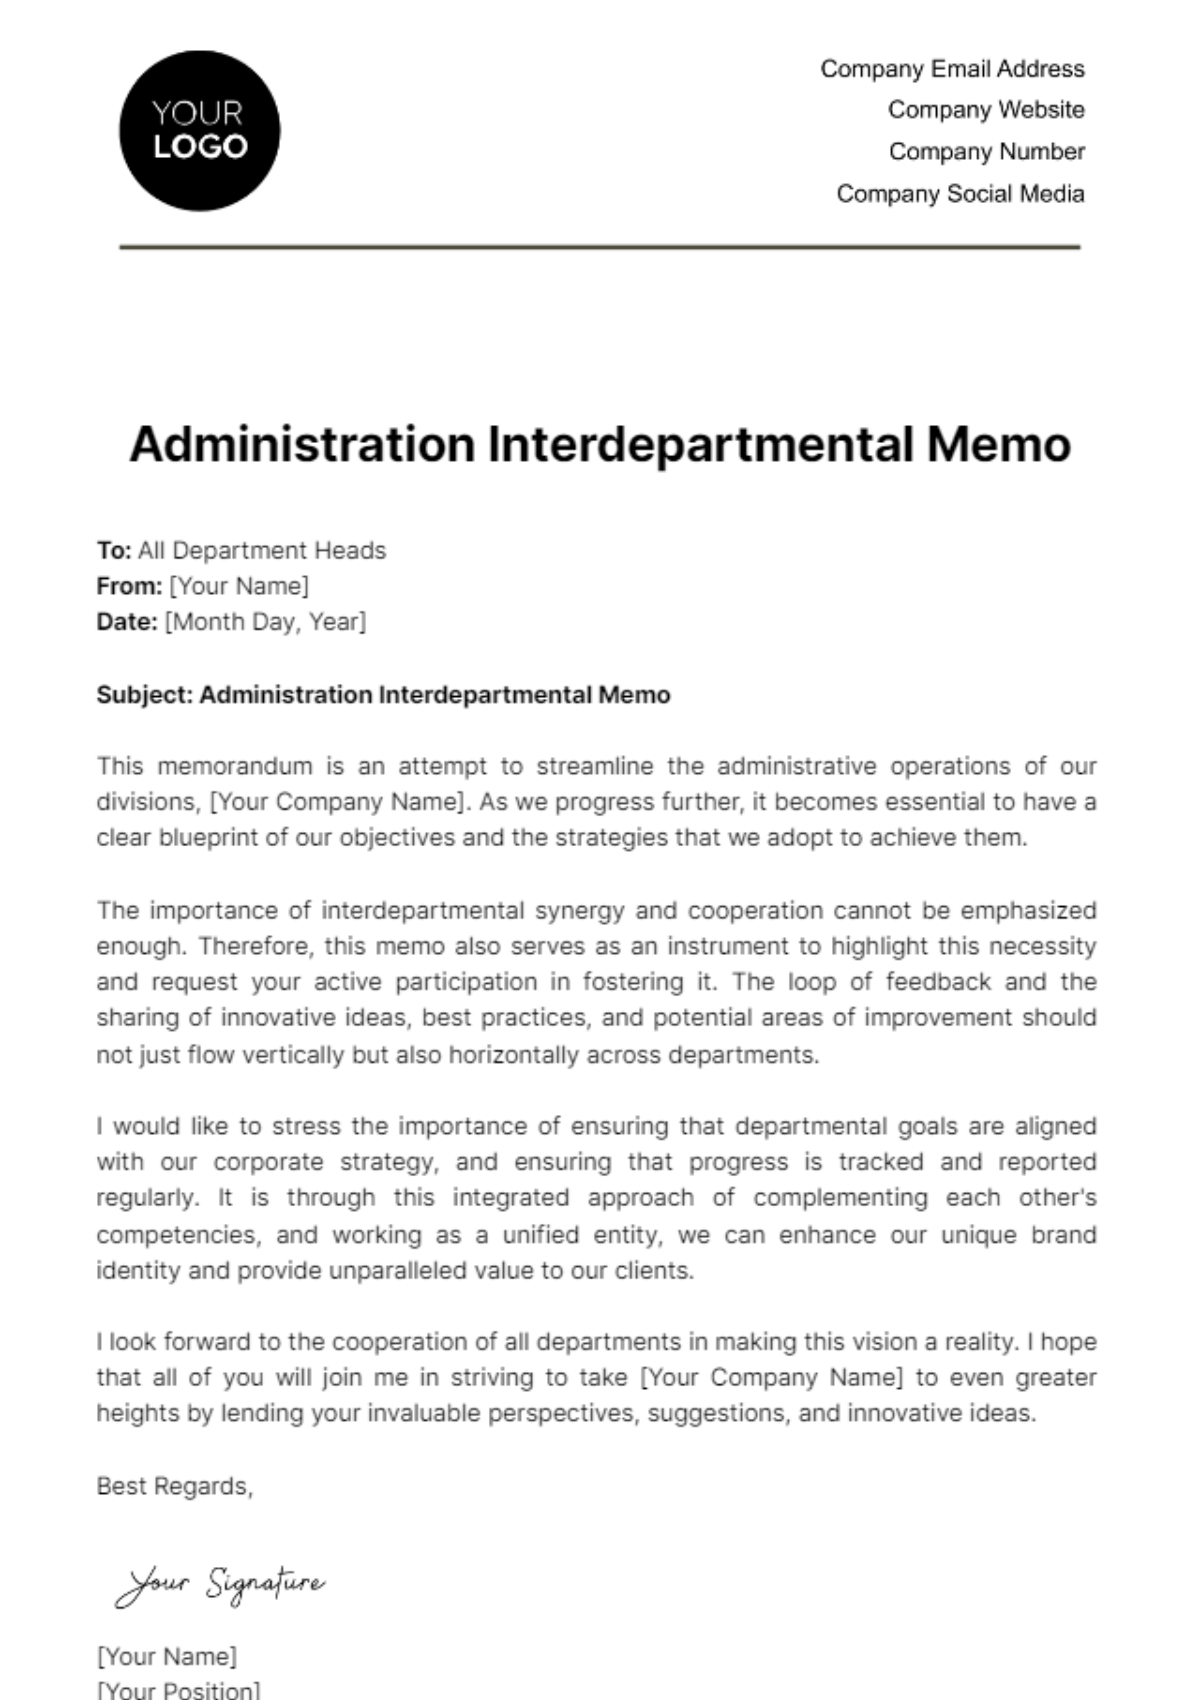 Free Administration Interdepartmental Memo Template